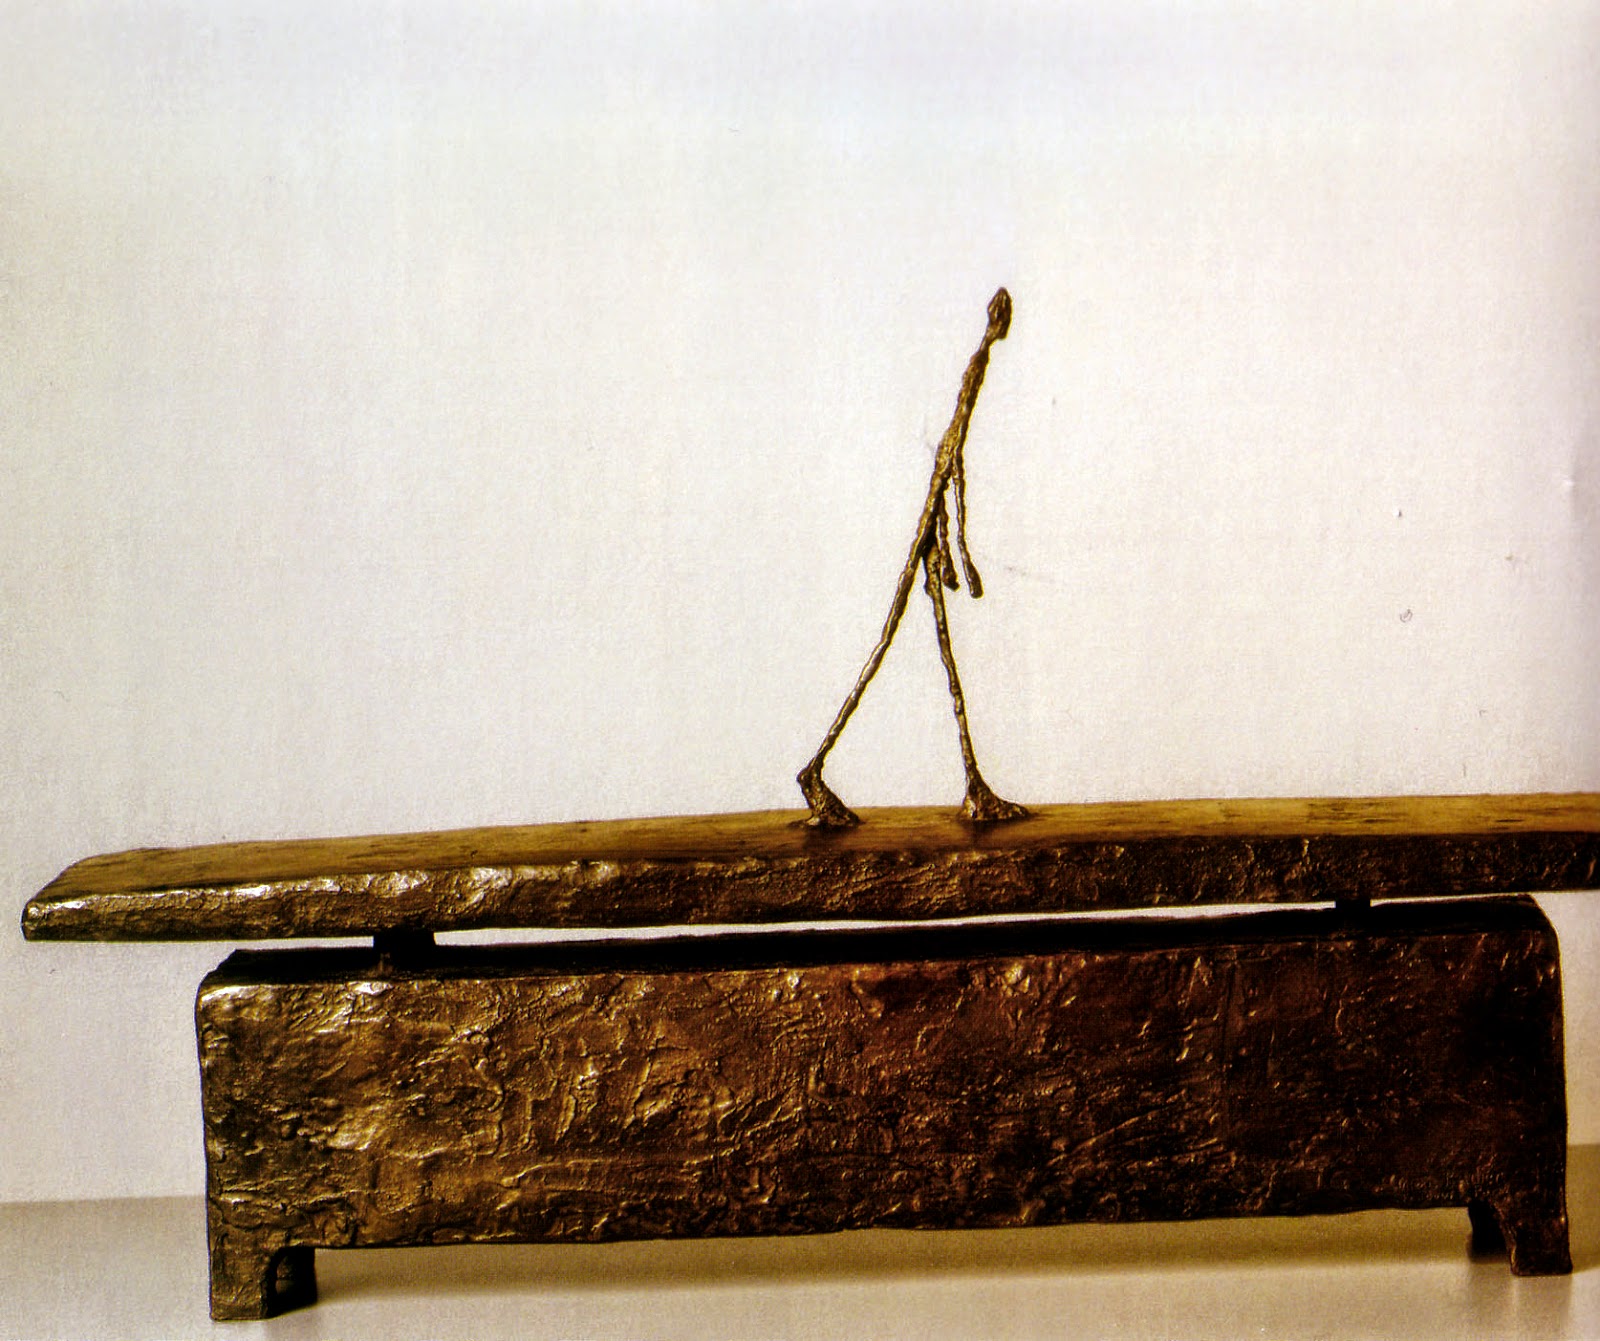 Alberto+Giacometti-1901-1966 (92).jpg